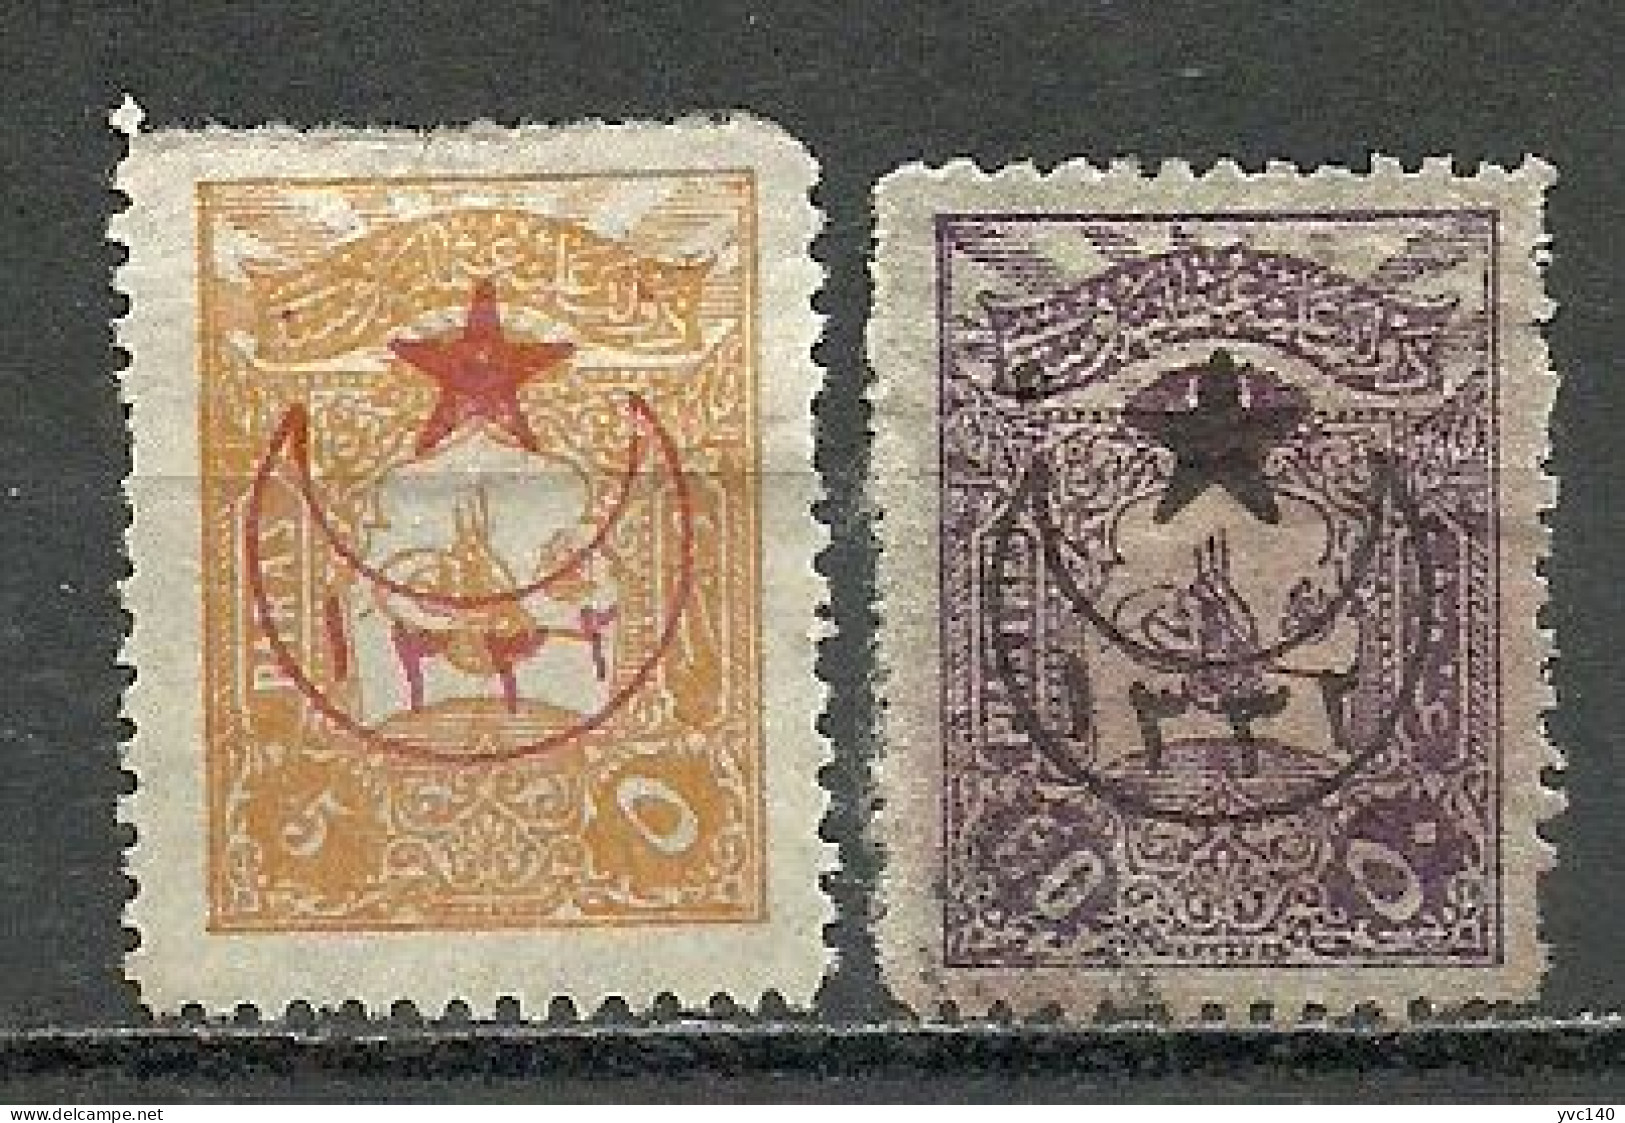 Turkey; 1916 Overprinted War Issue Stamps - Usados